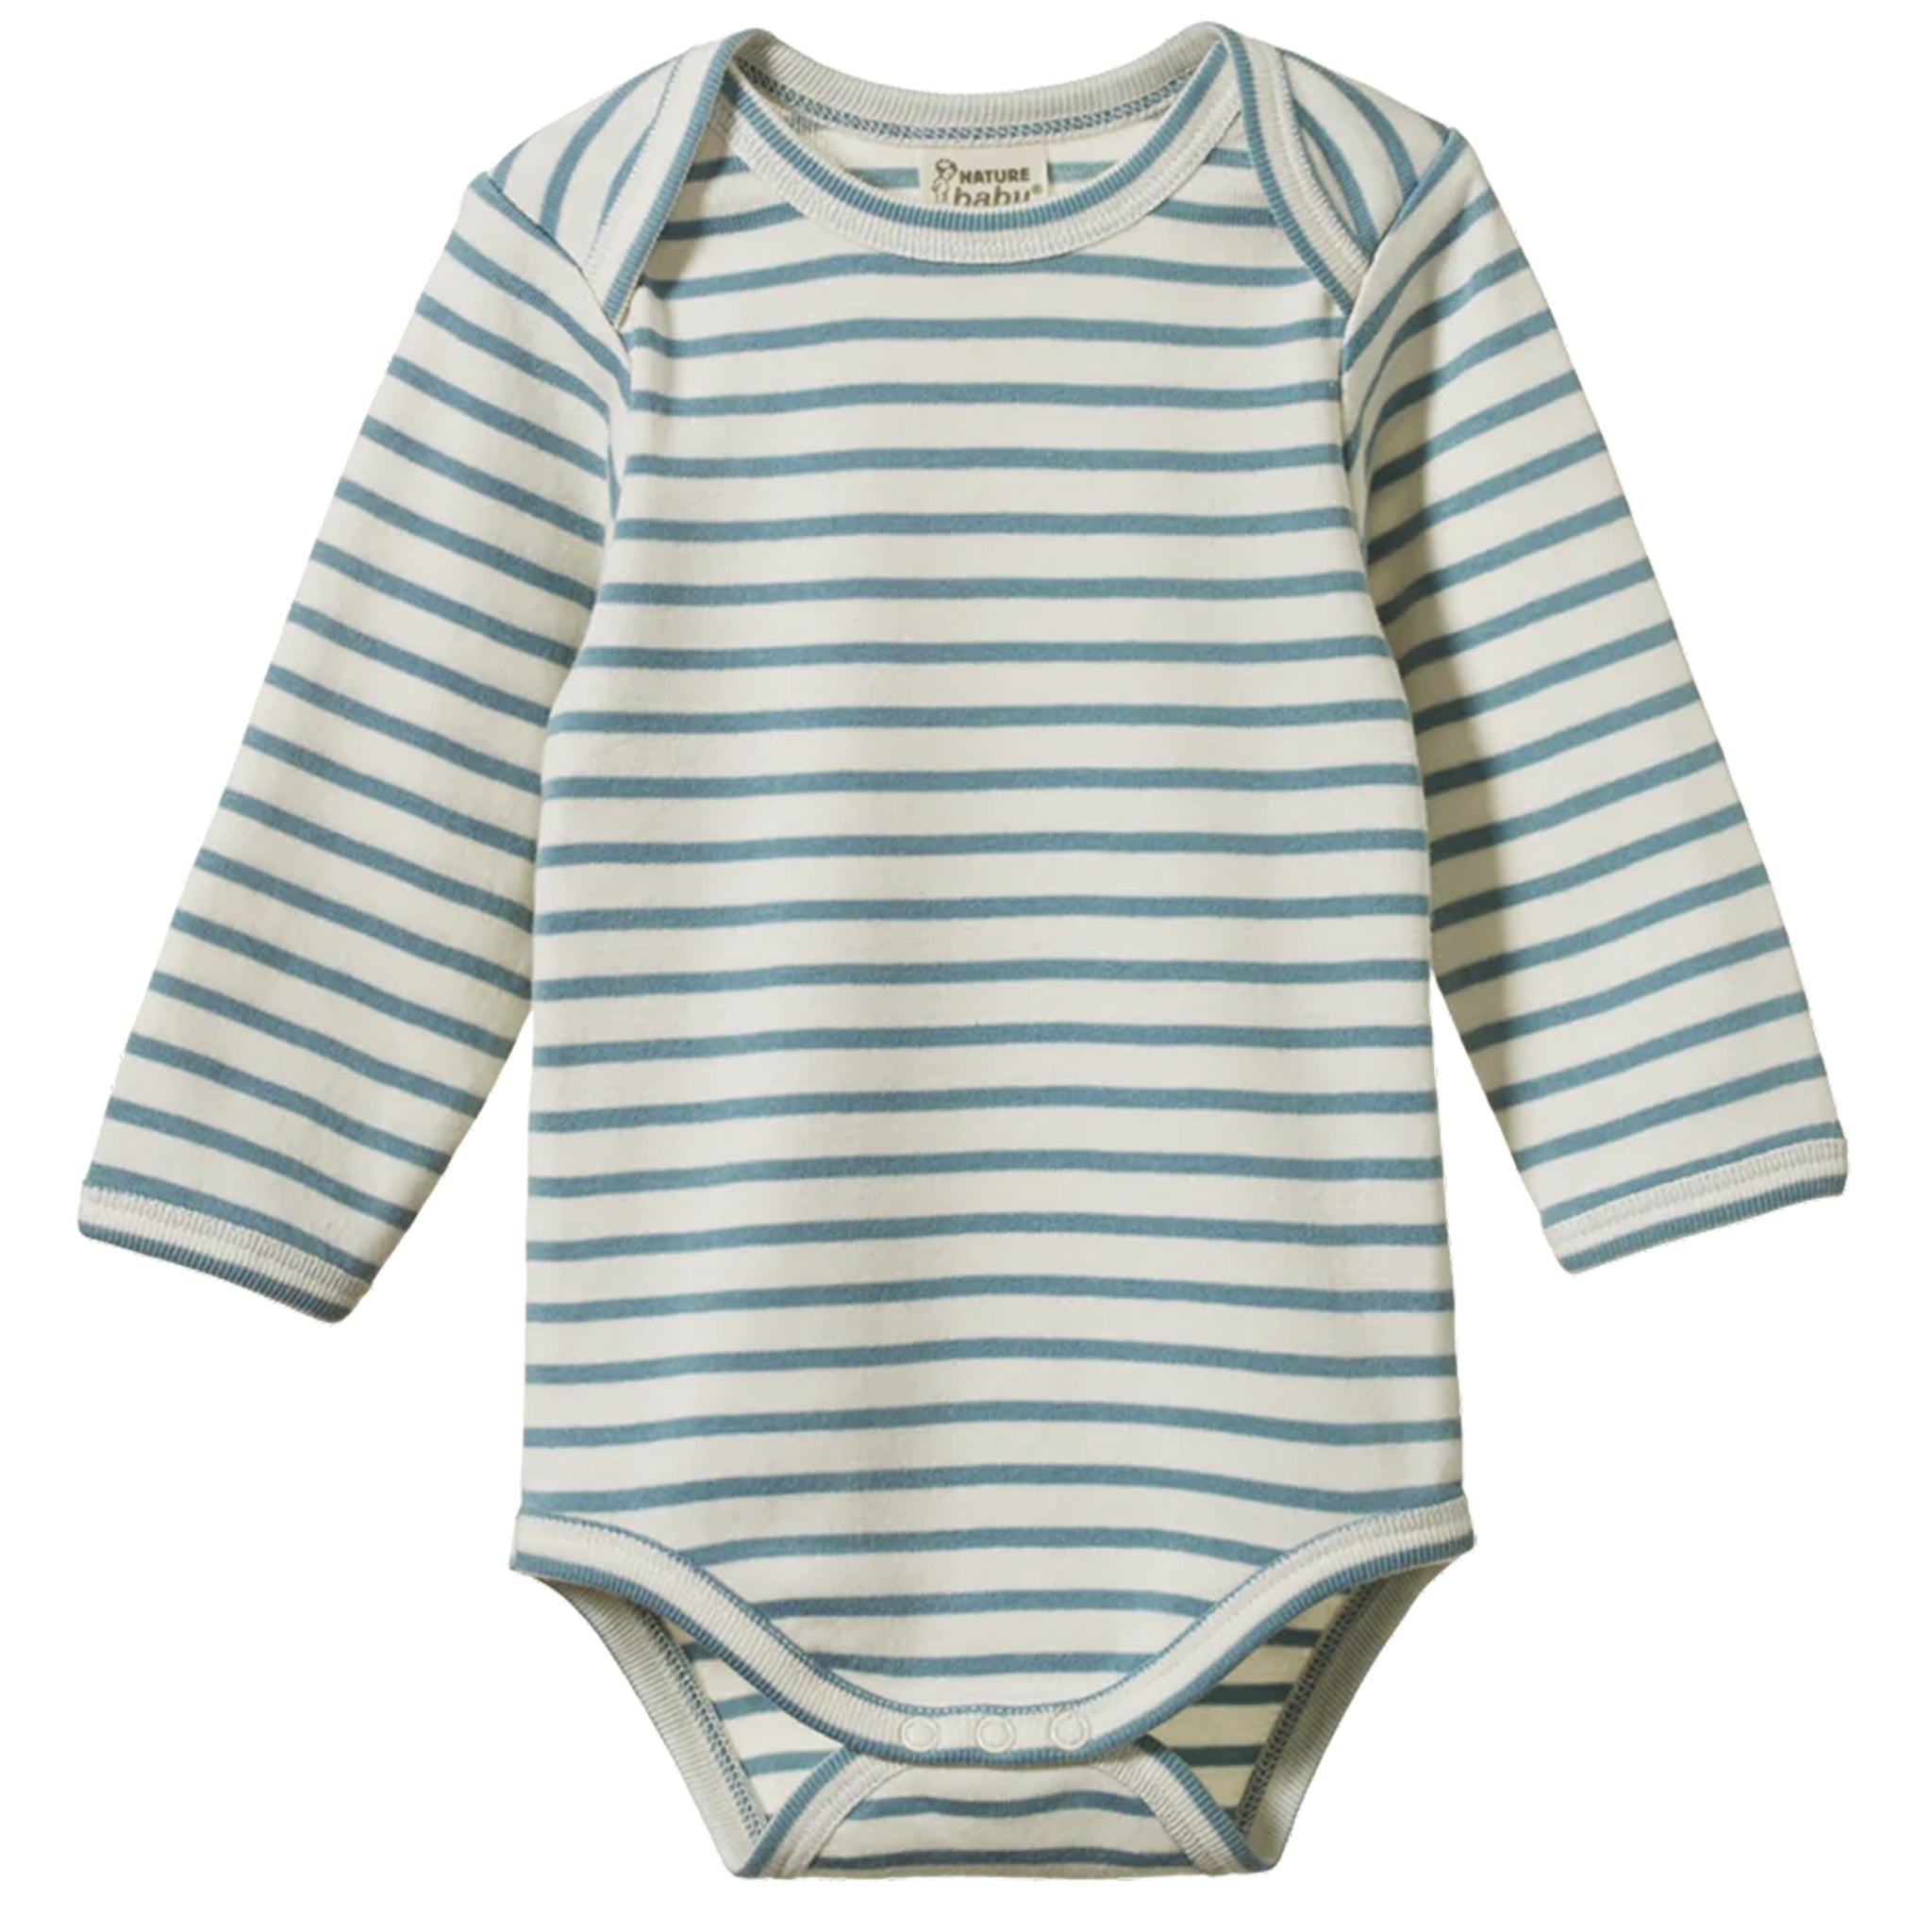 Nature Baby Organic Cotton Long Sleeve Bodysuit - Mineral Sailor Stripe - Tea Pea Home